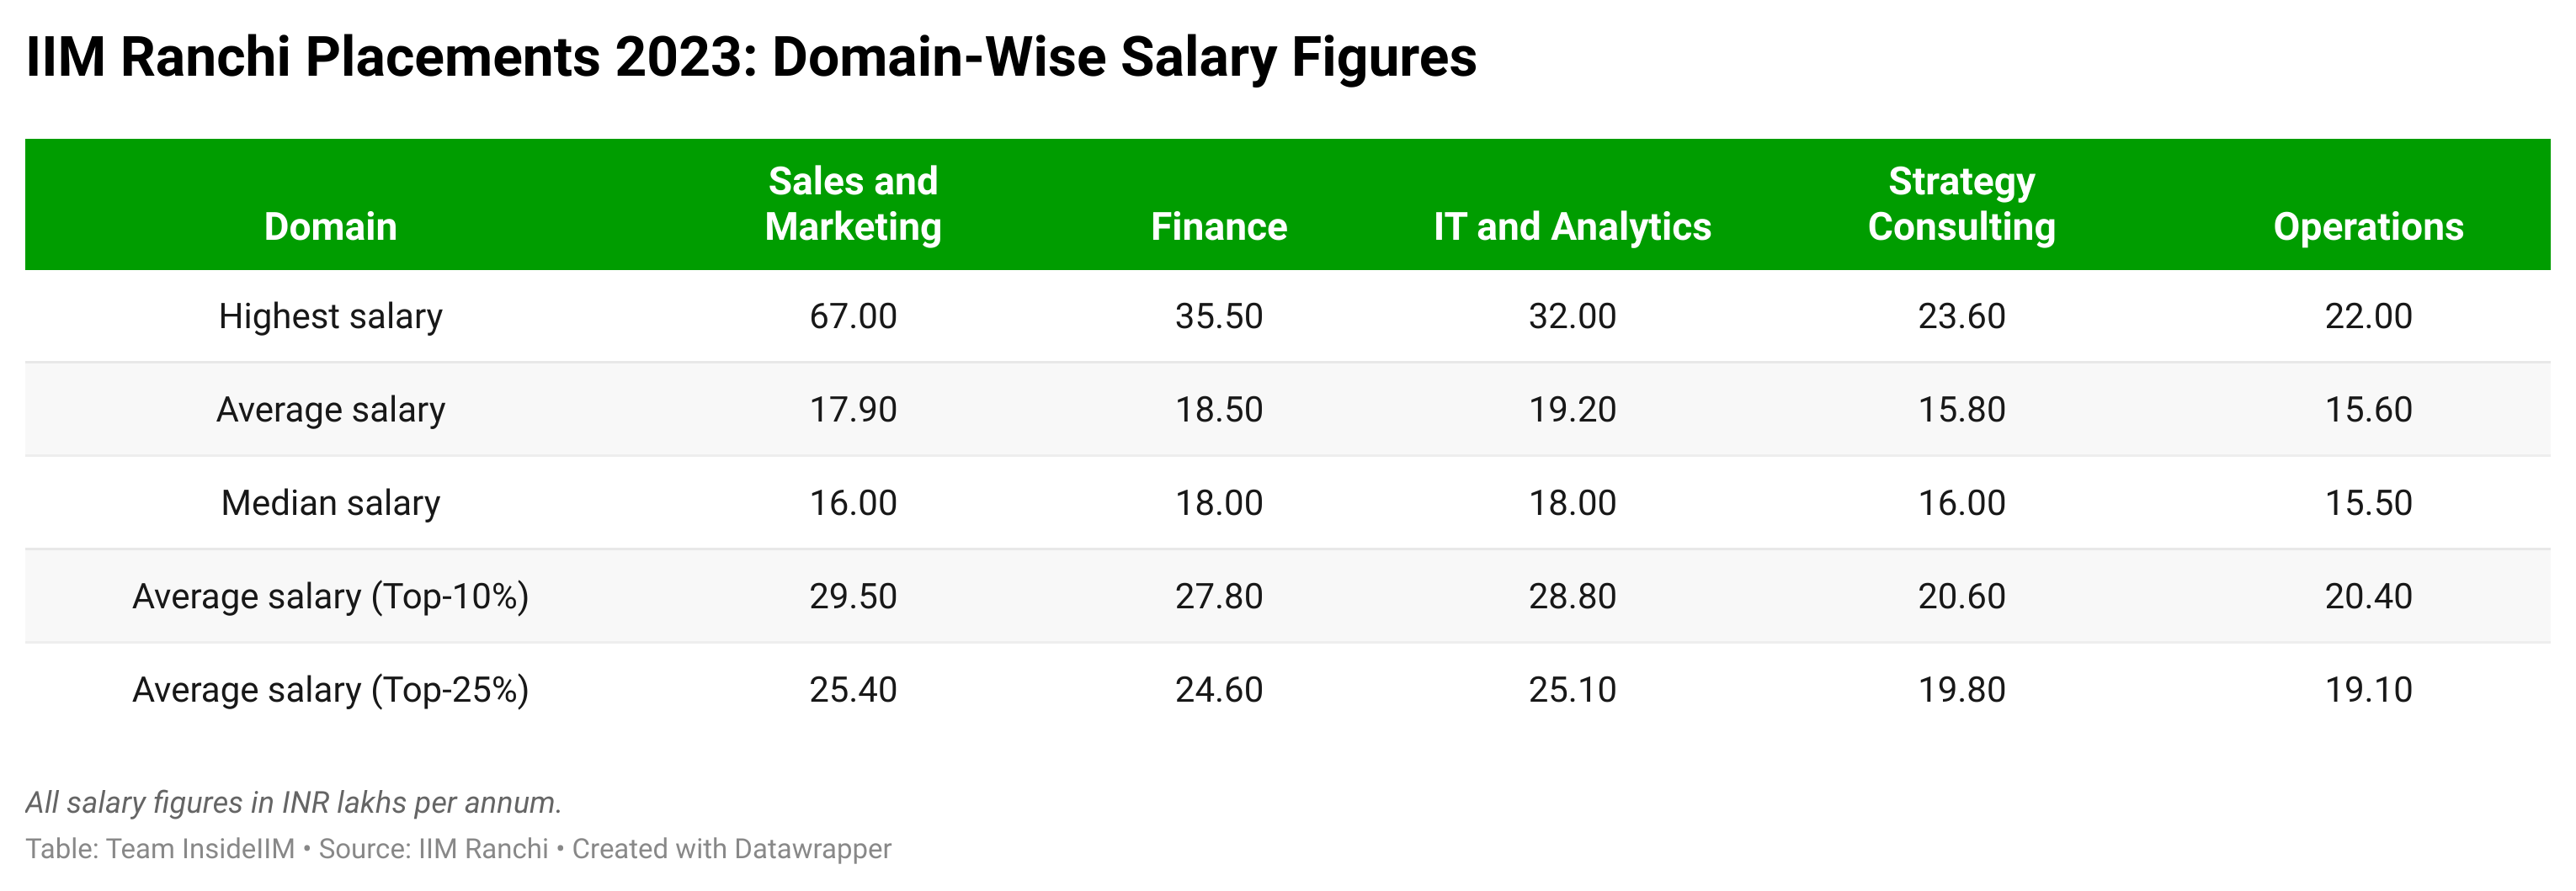 IIM Ranchi placements 2023: domain-wise salaries